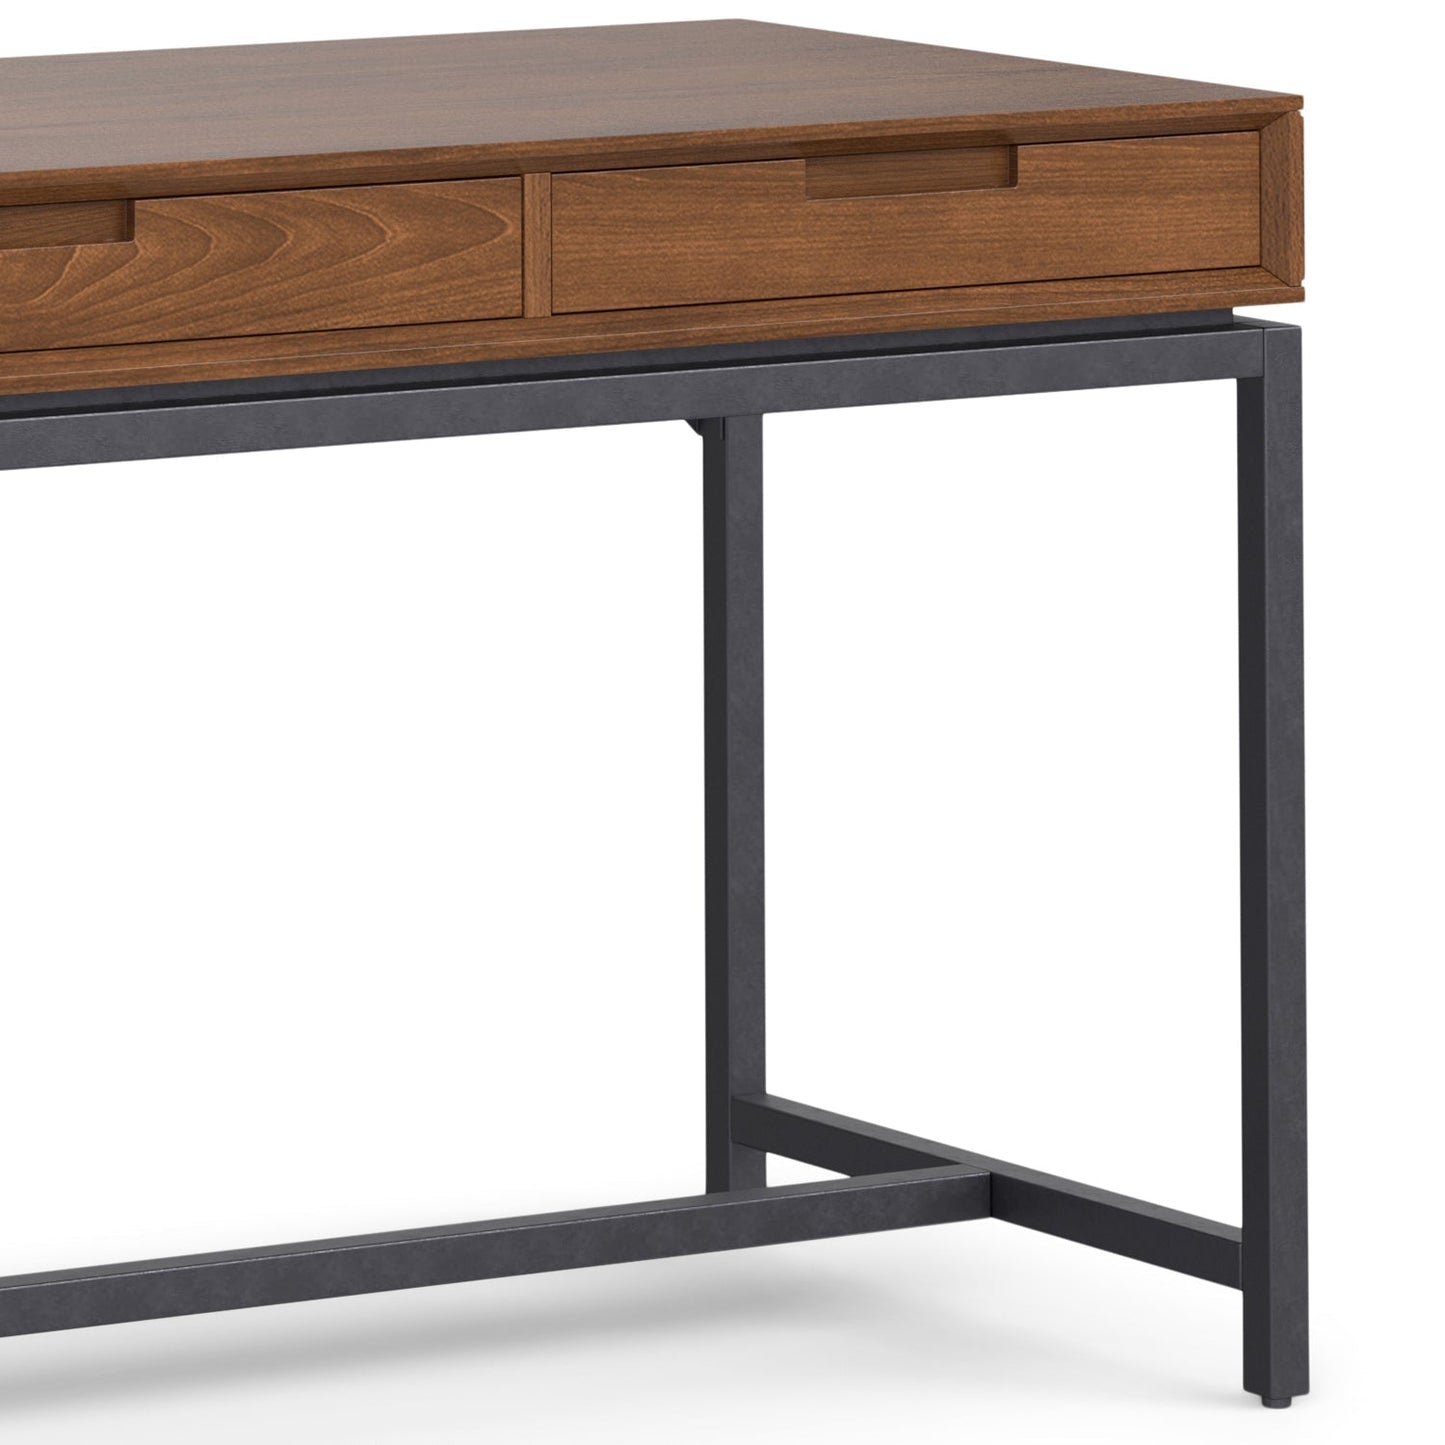 Banting - Mid Century Wide Desk - Walnut Veneer